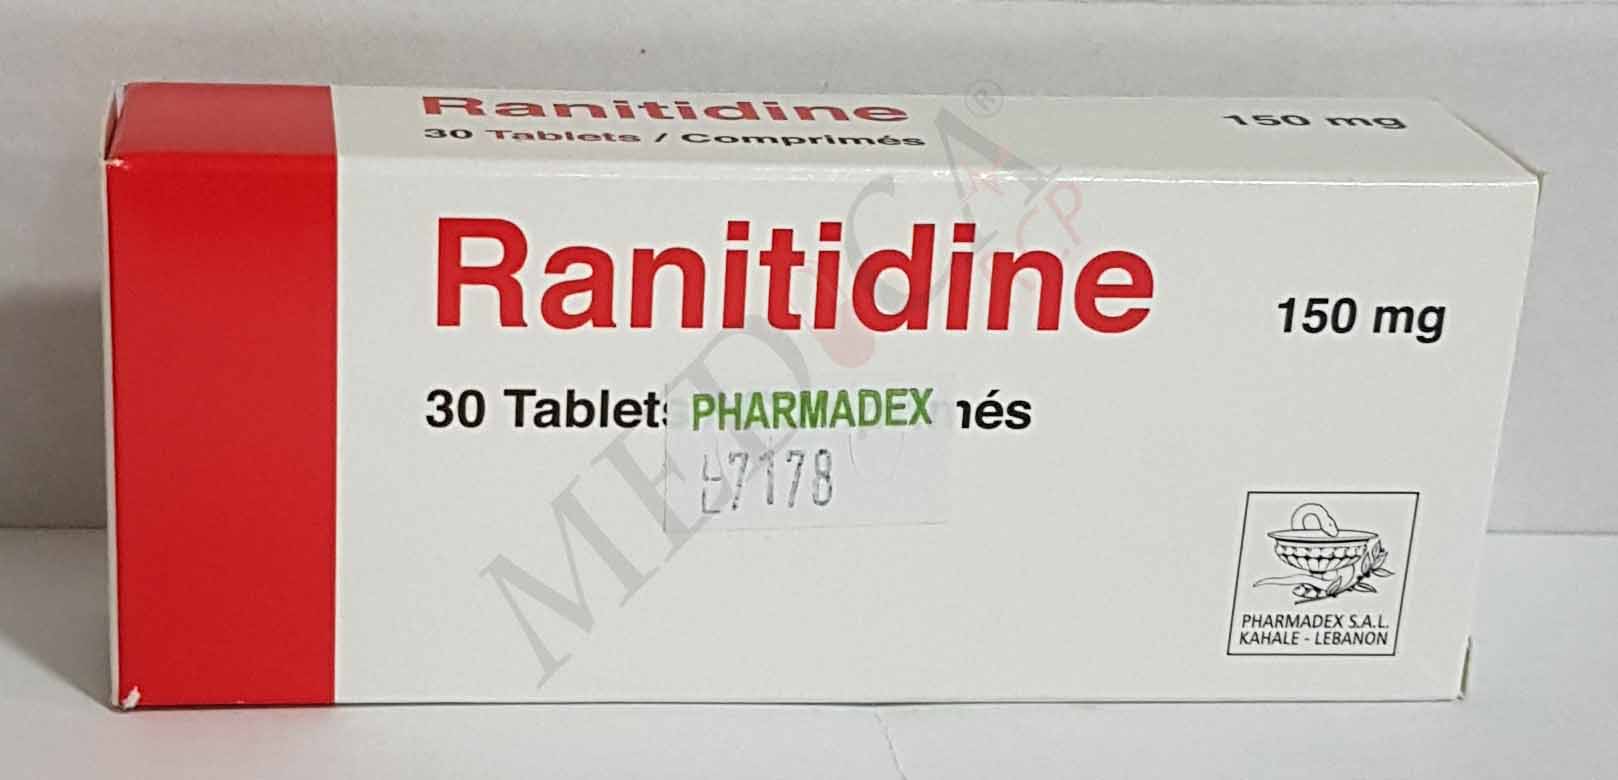 Ranitidine Pharmadex*